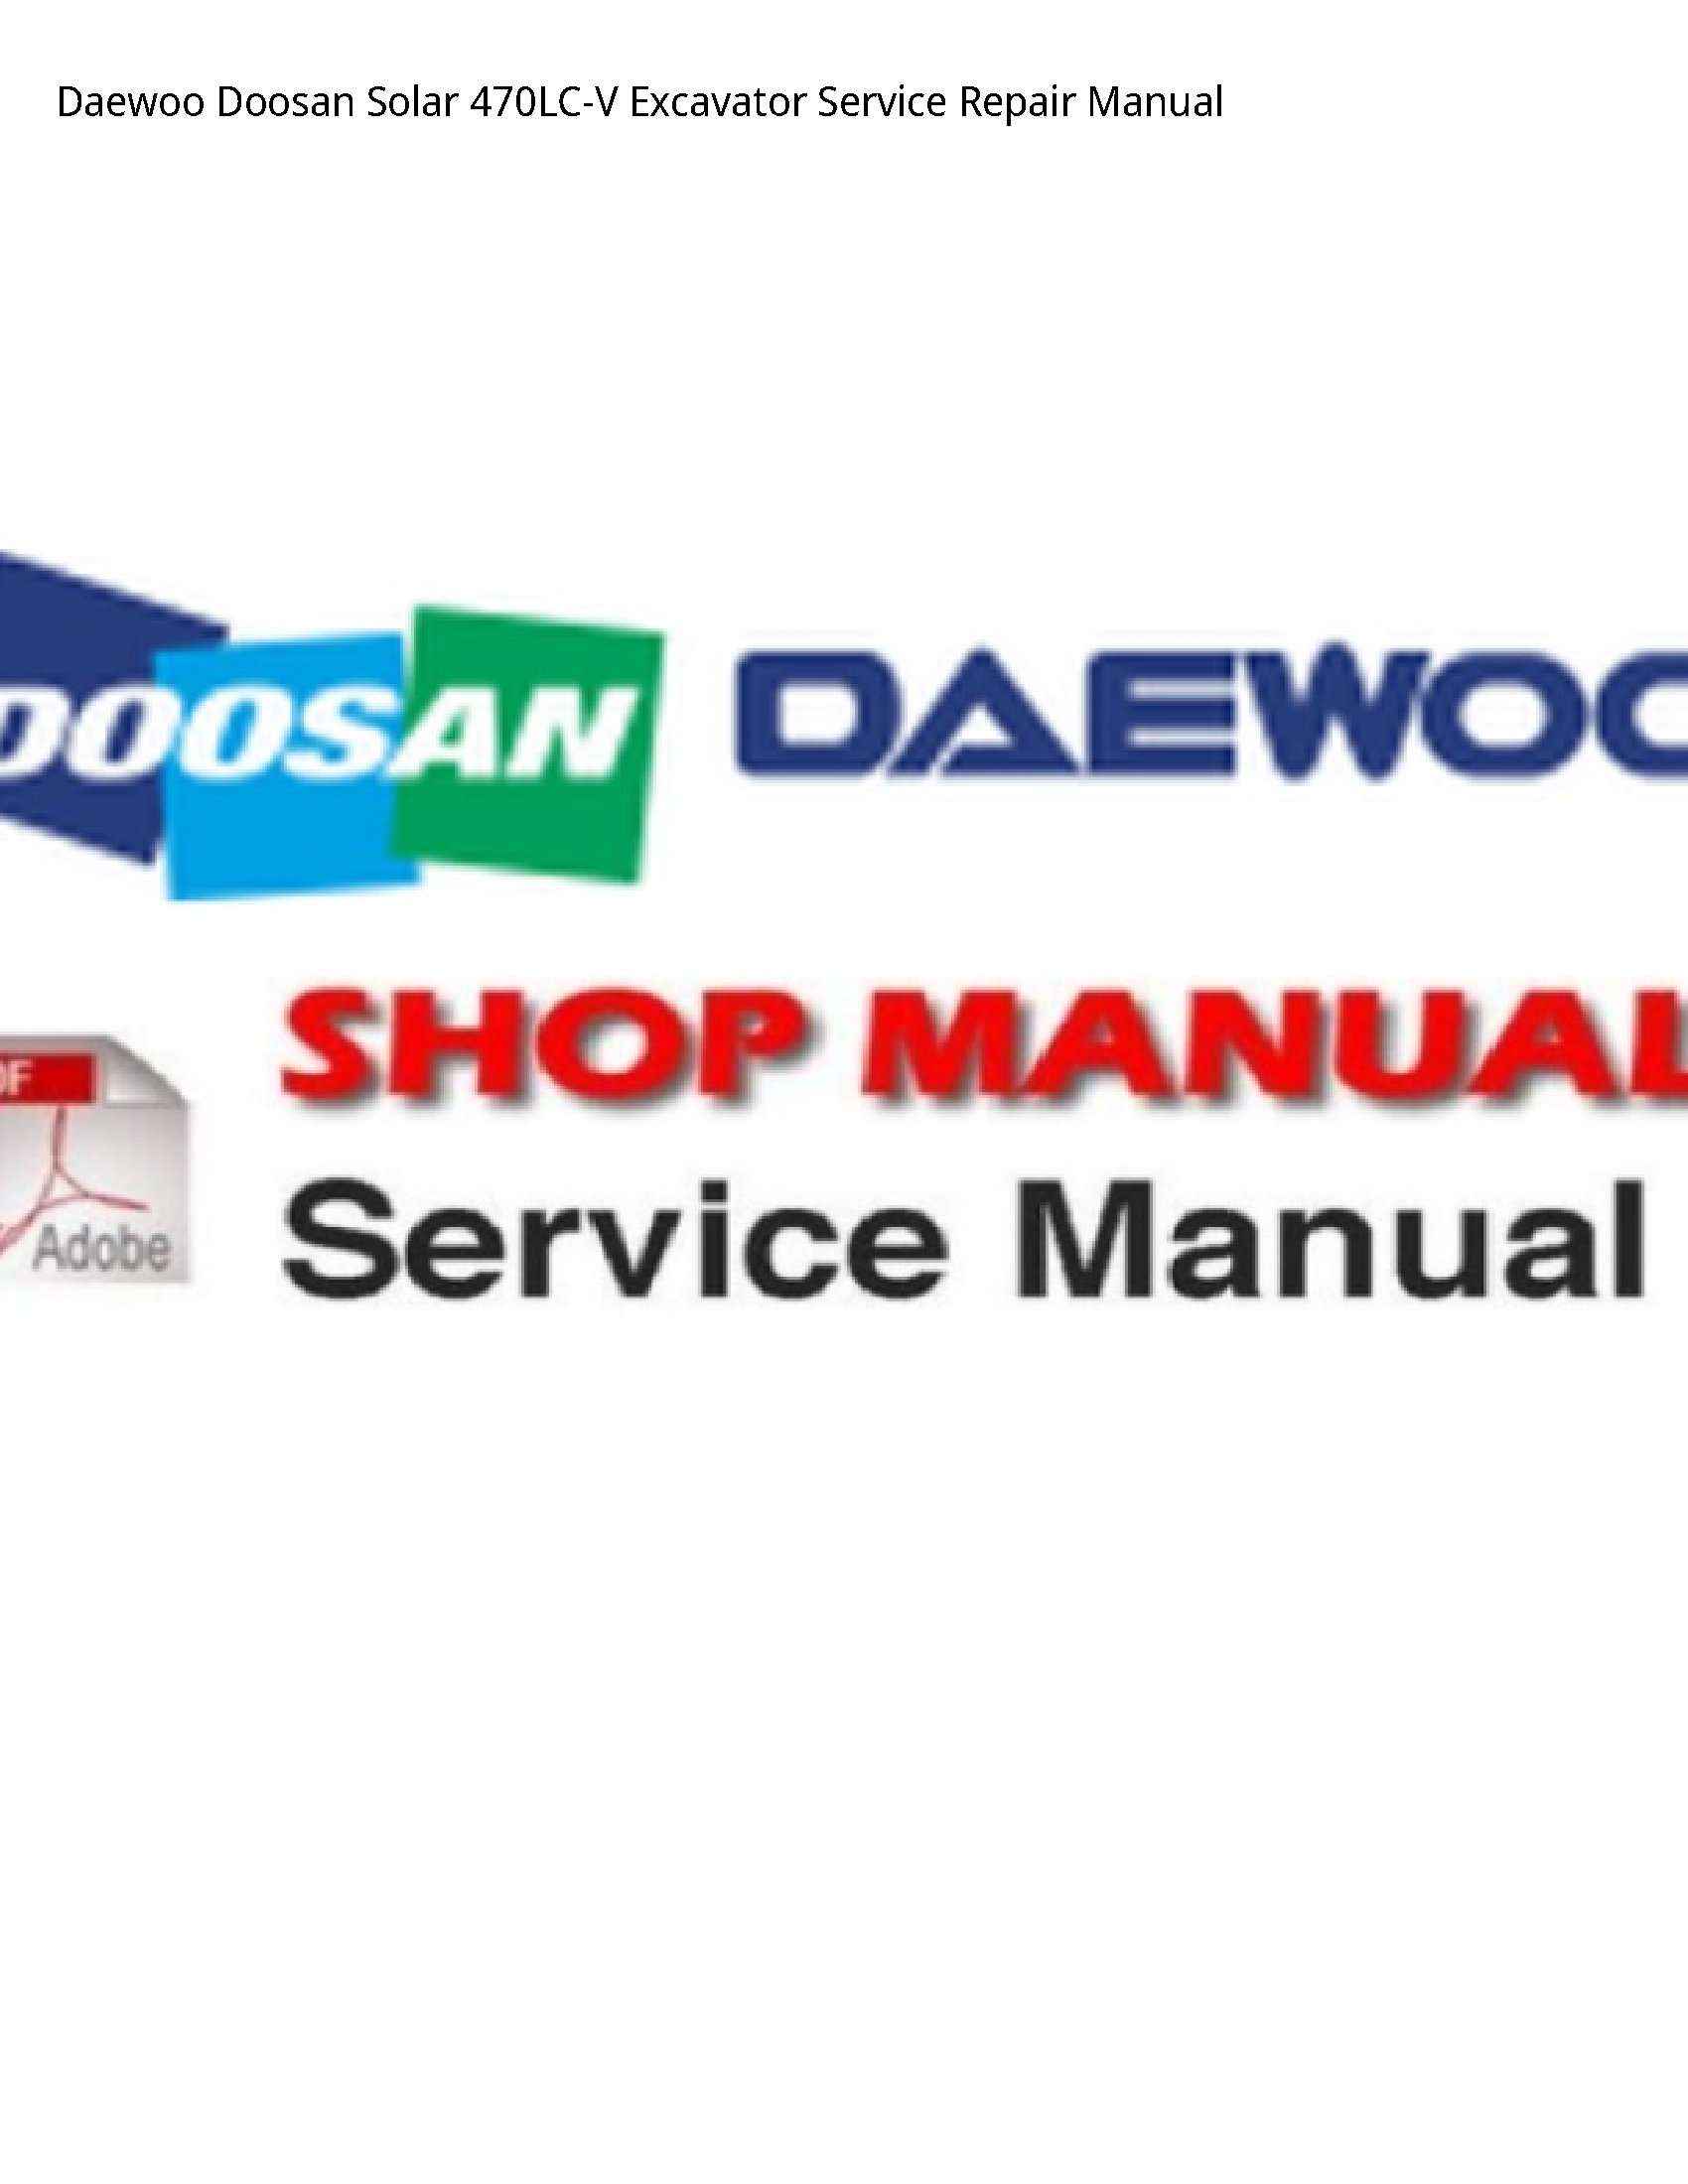 Daewoo Doosan 470LC-V Solar Excavator manual